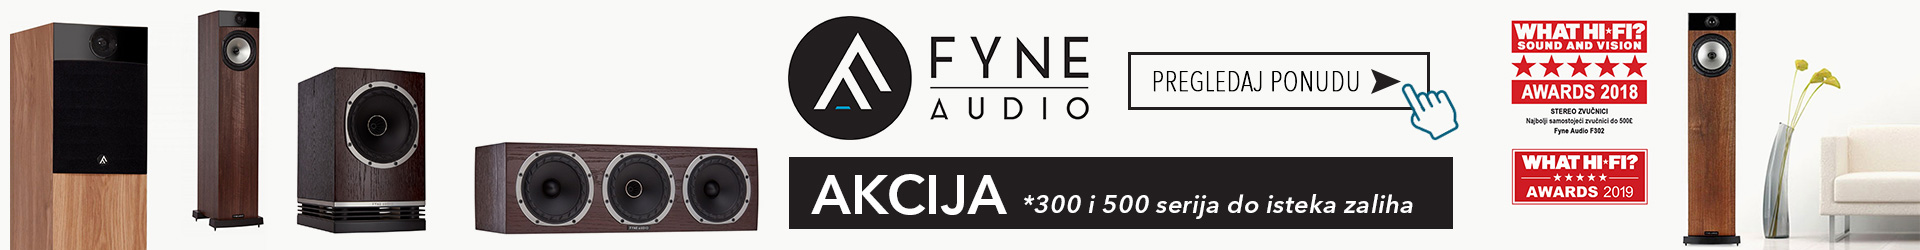 Fyne Audio akcija do isteka zaliha